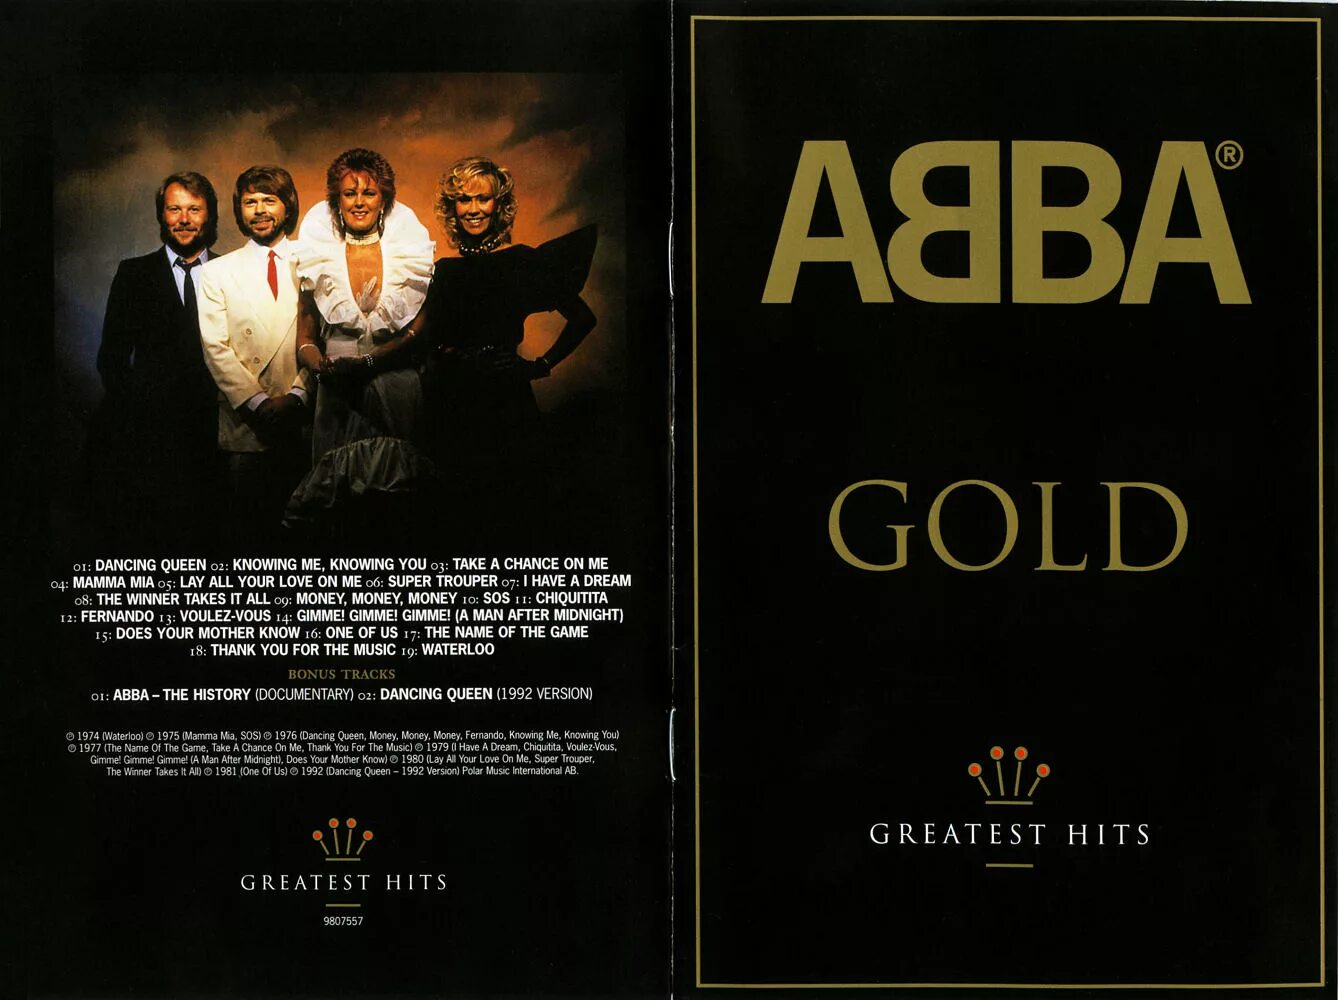 Dancing queen слушать. ABBA Gold DVD. ABBA Dancing Queen обложка. ABBA 1975 Greatest Hits обложка Vinyl. ABBA. Gold: Greatest Hits.